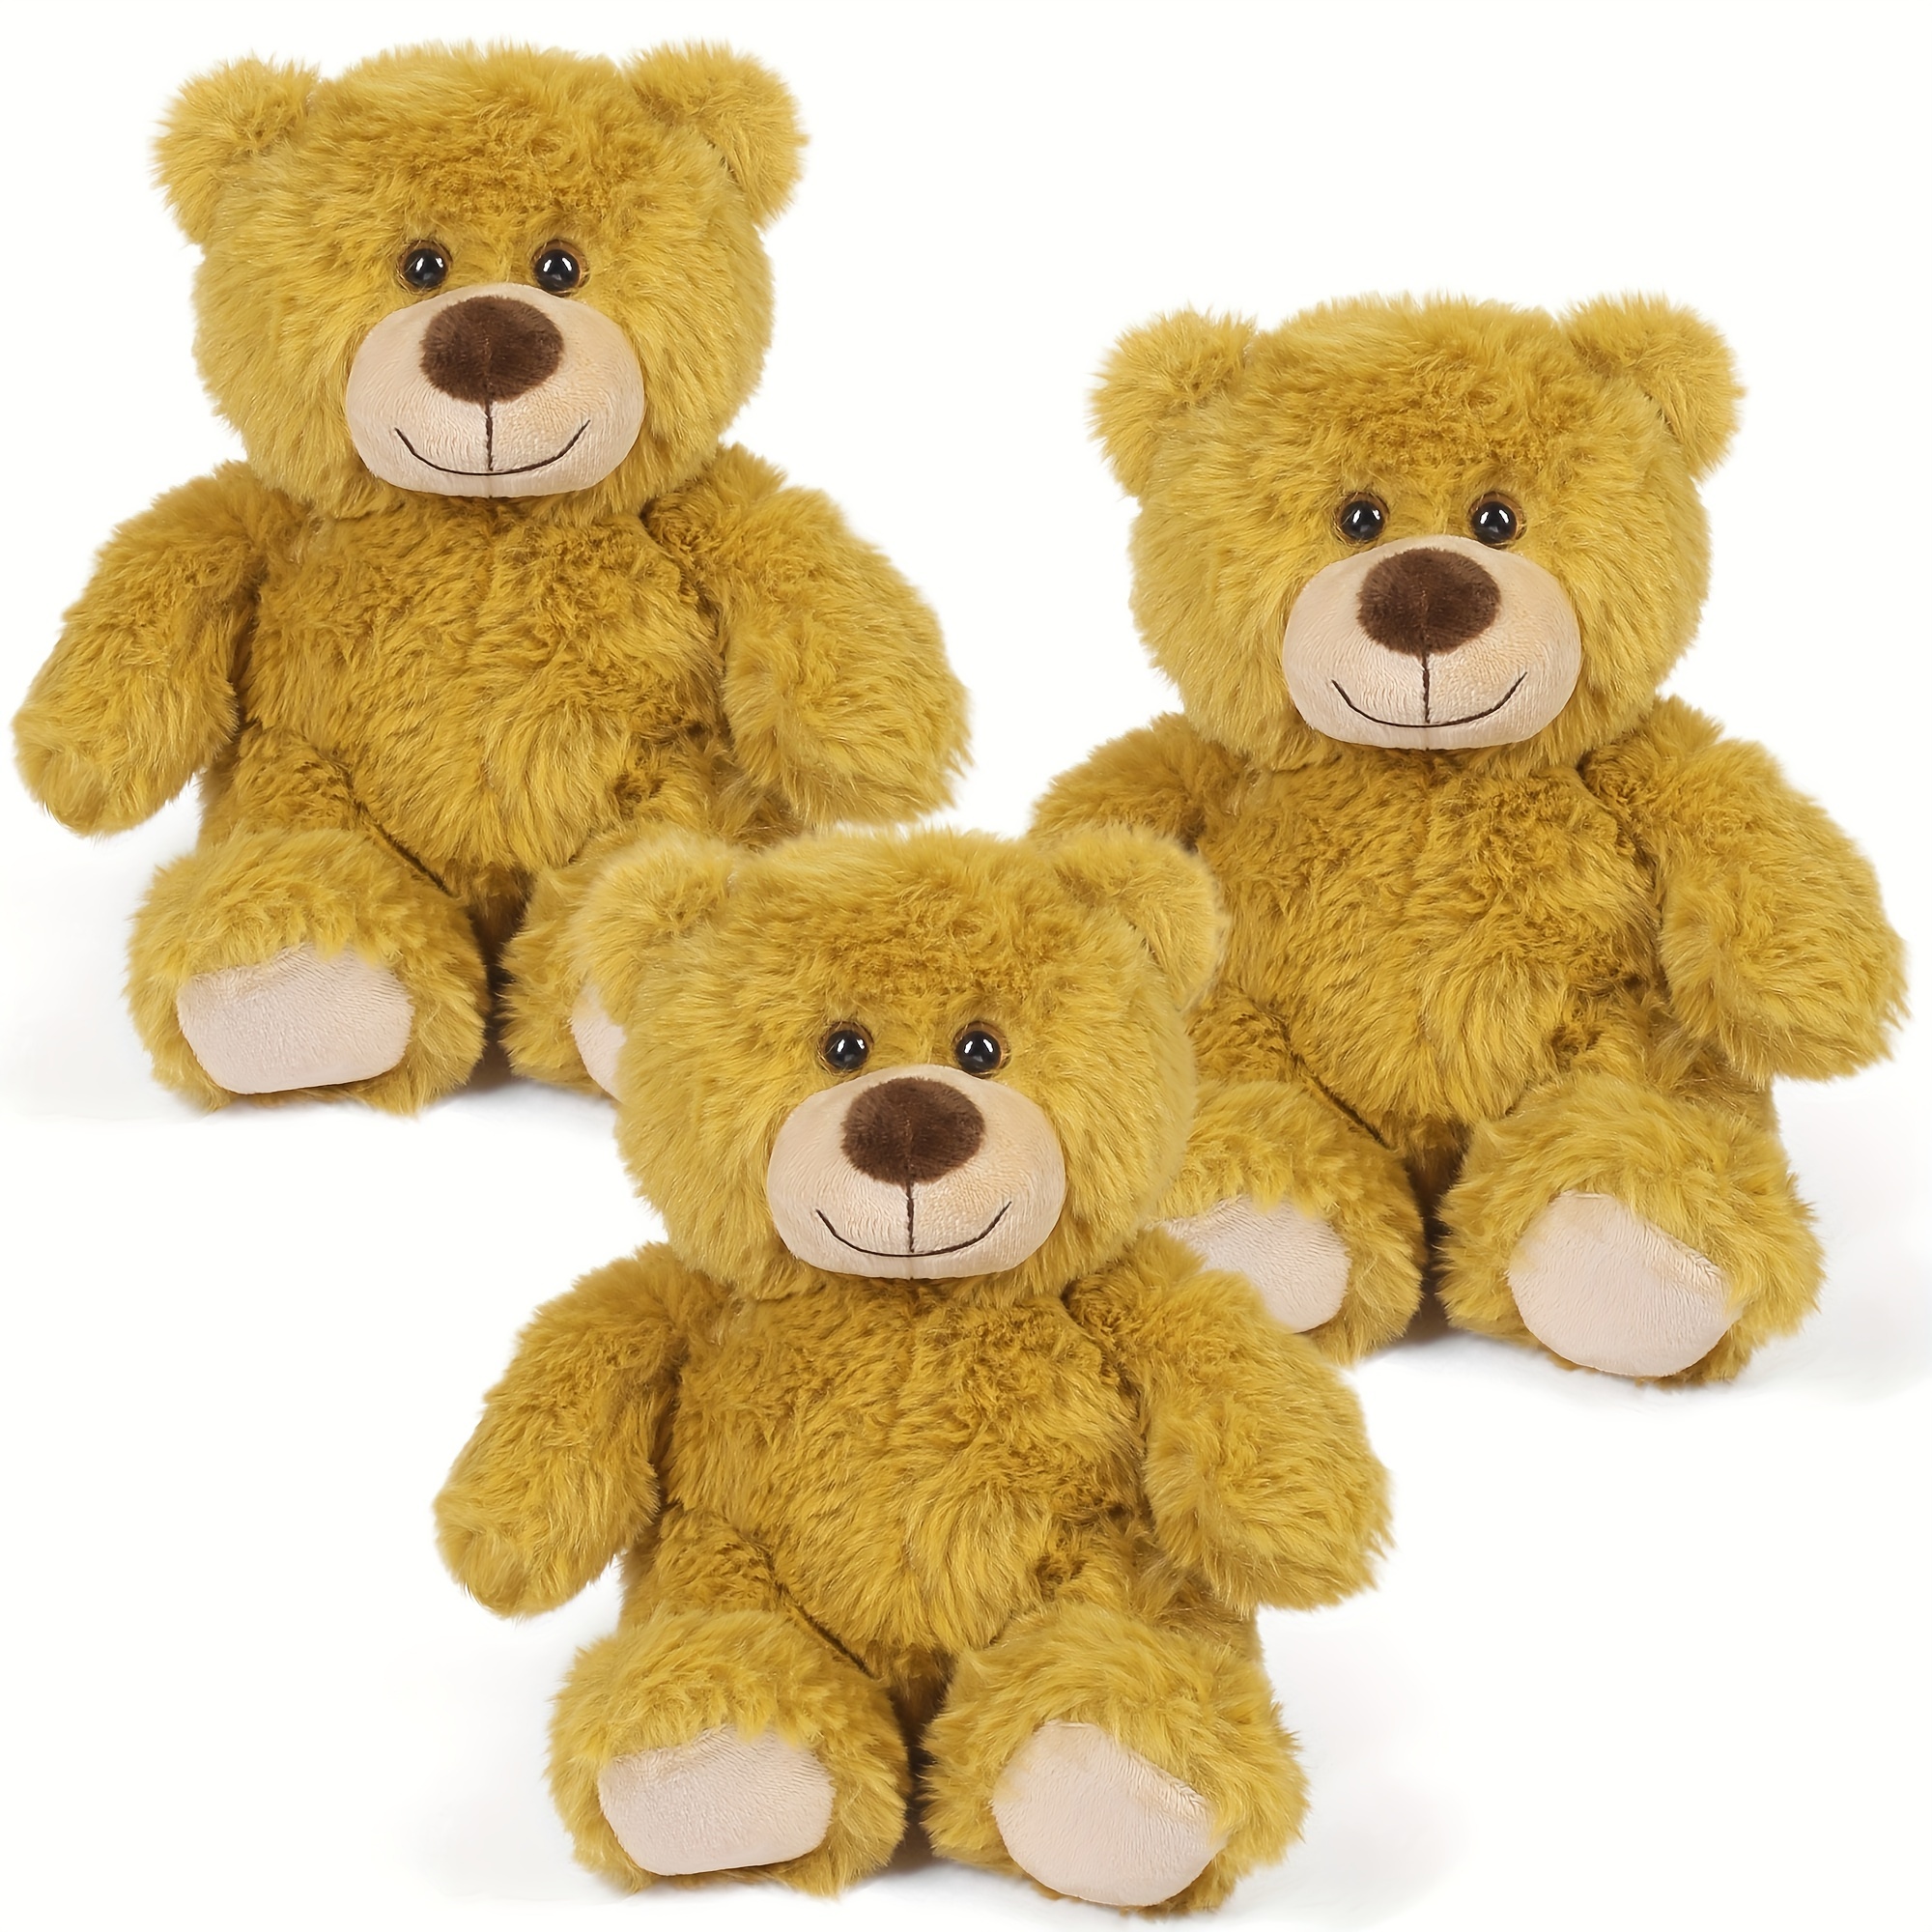 

Benben Teddy Bear Stuffed Animal, Set Of 3, 10 Inch Stuffed Bear Plush Toy For Kids, Baby Shower Decoration For Boys, Girls, Gift For Girlfriend, Valentine's Day, Kids Birthday Gifts